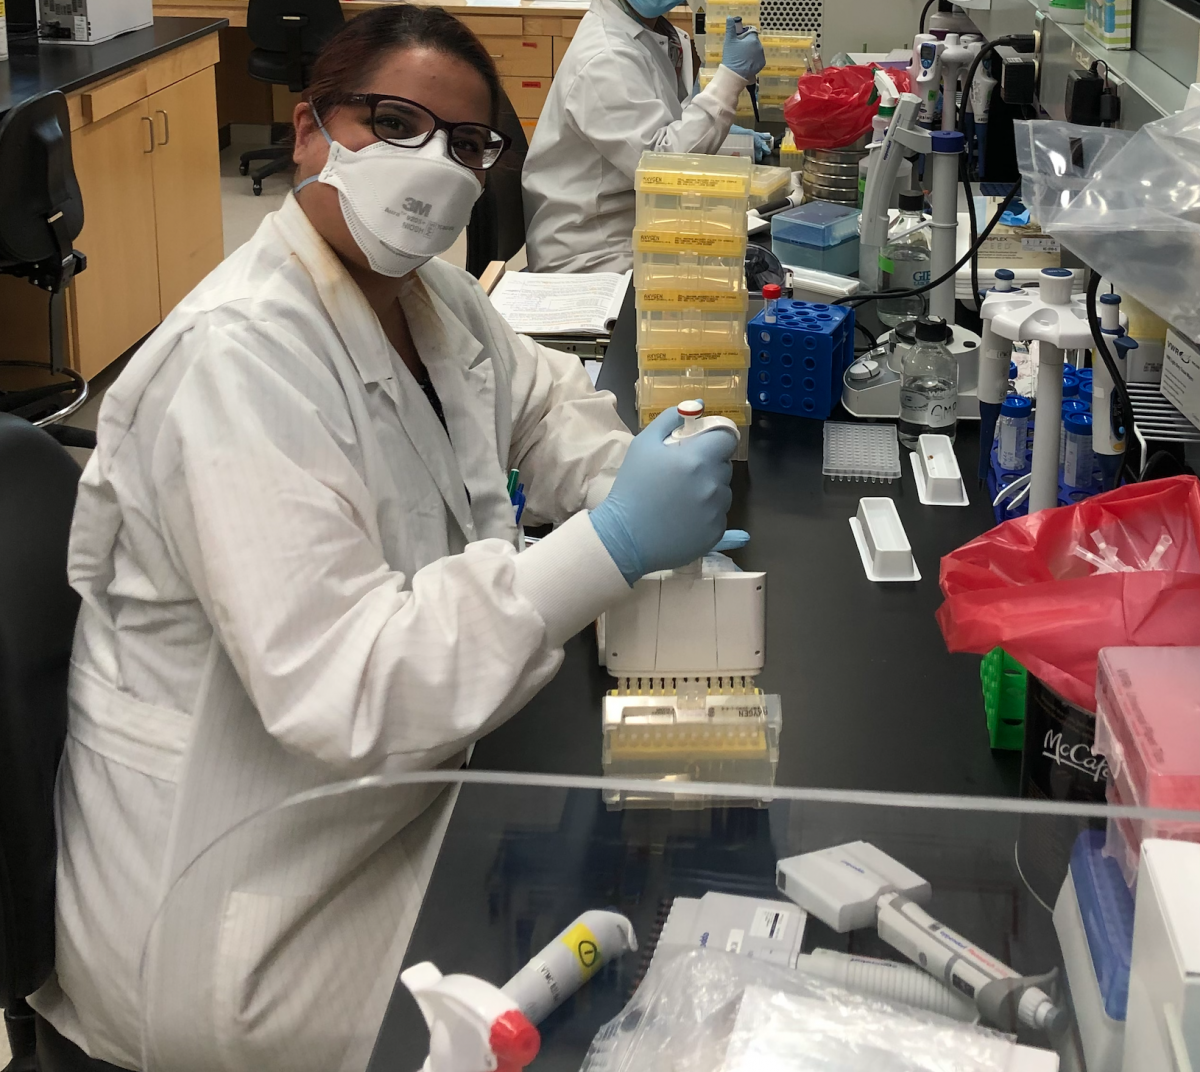 Zahra working in the lab at University of Saskatchewan.